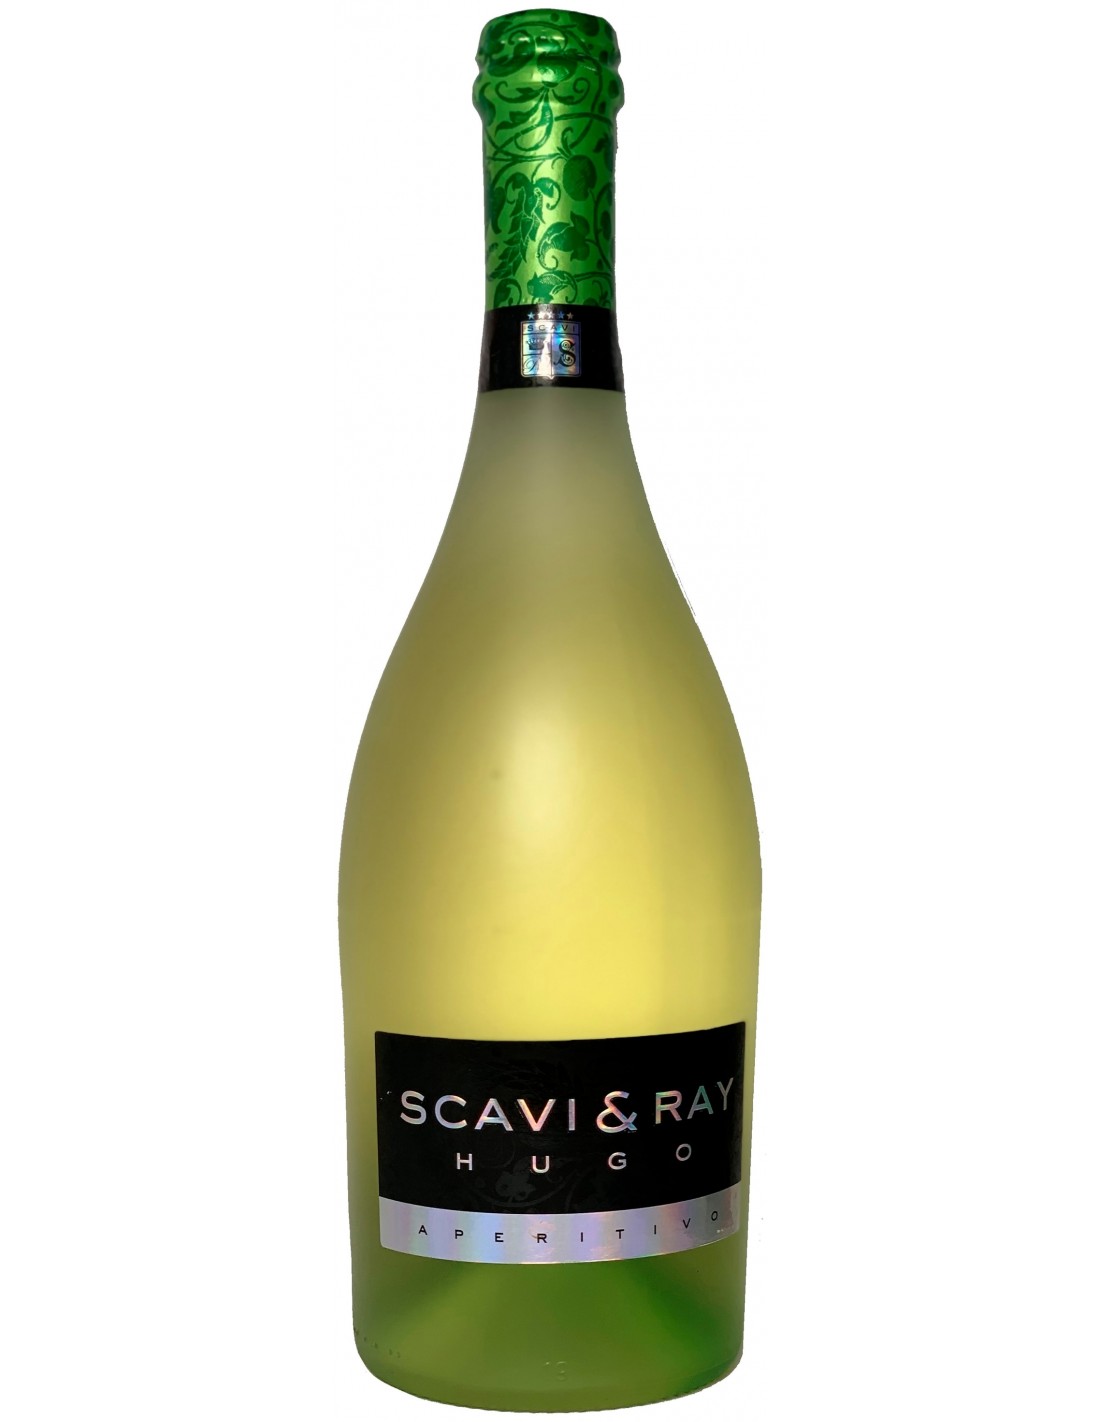 Aperitiv Scavi&Ray Hugo, 6% alc., 0.75L, Italia alcooldiscount.ro